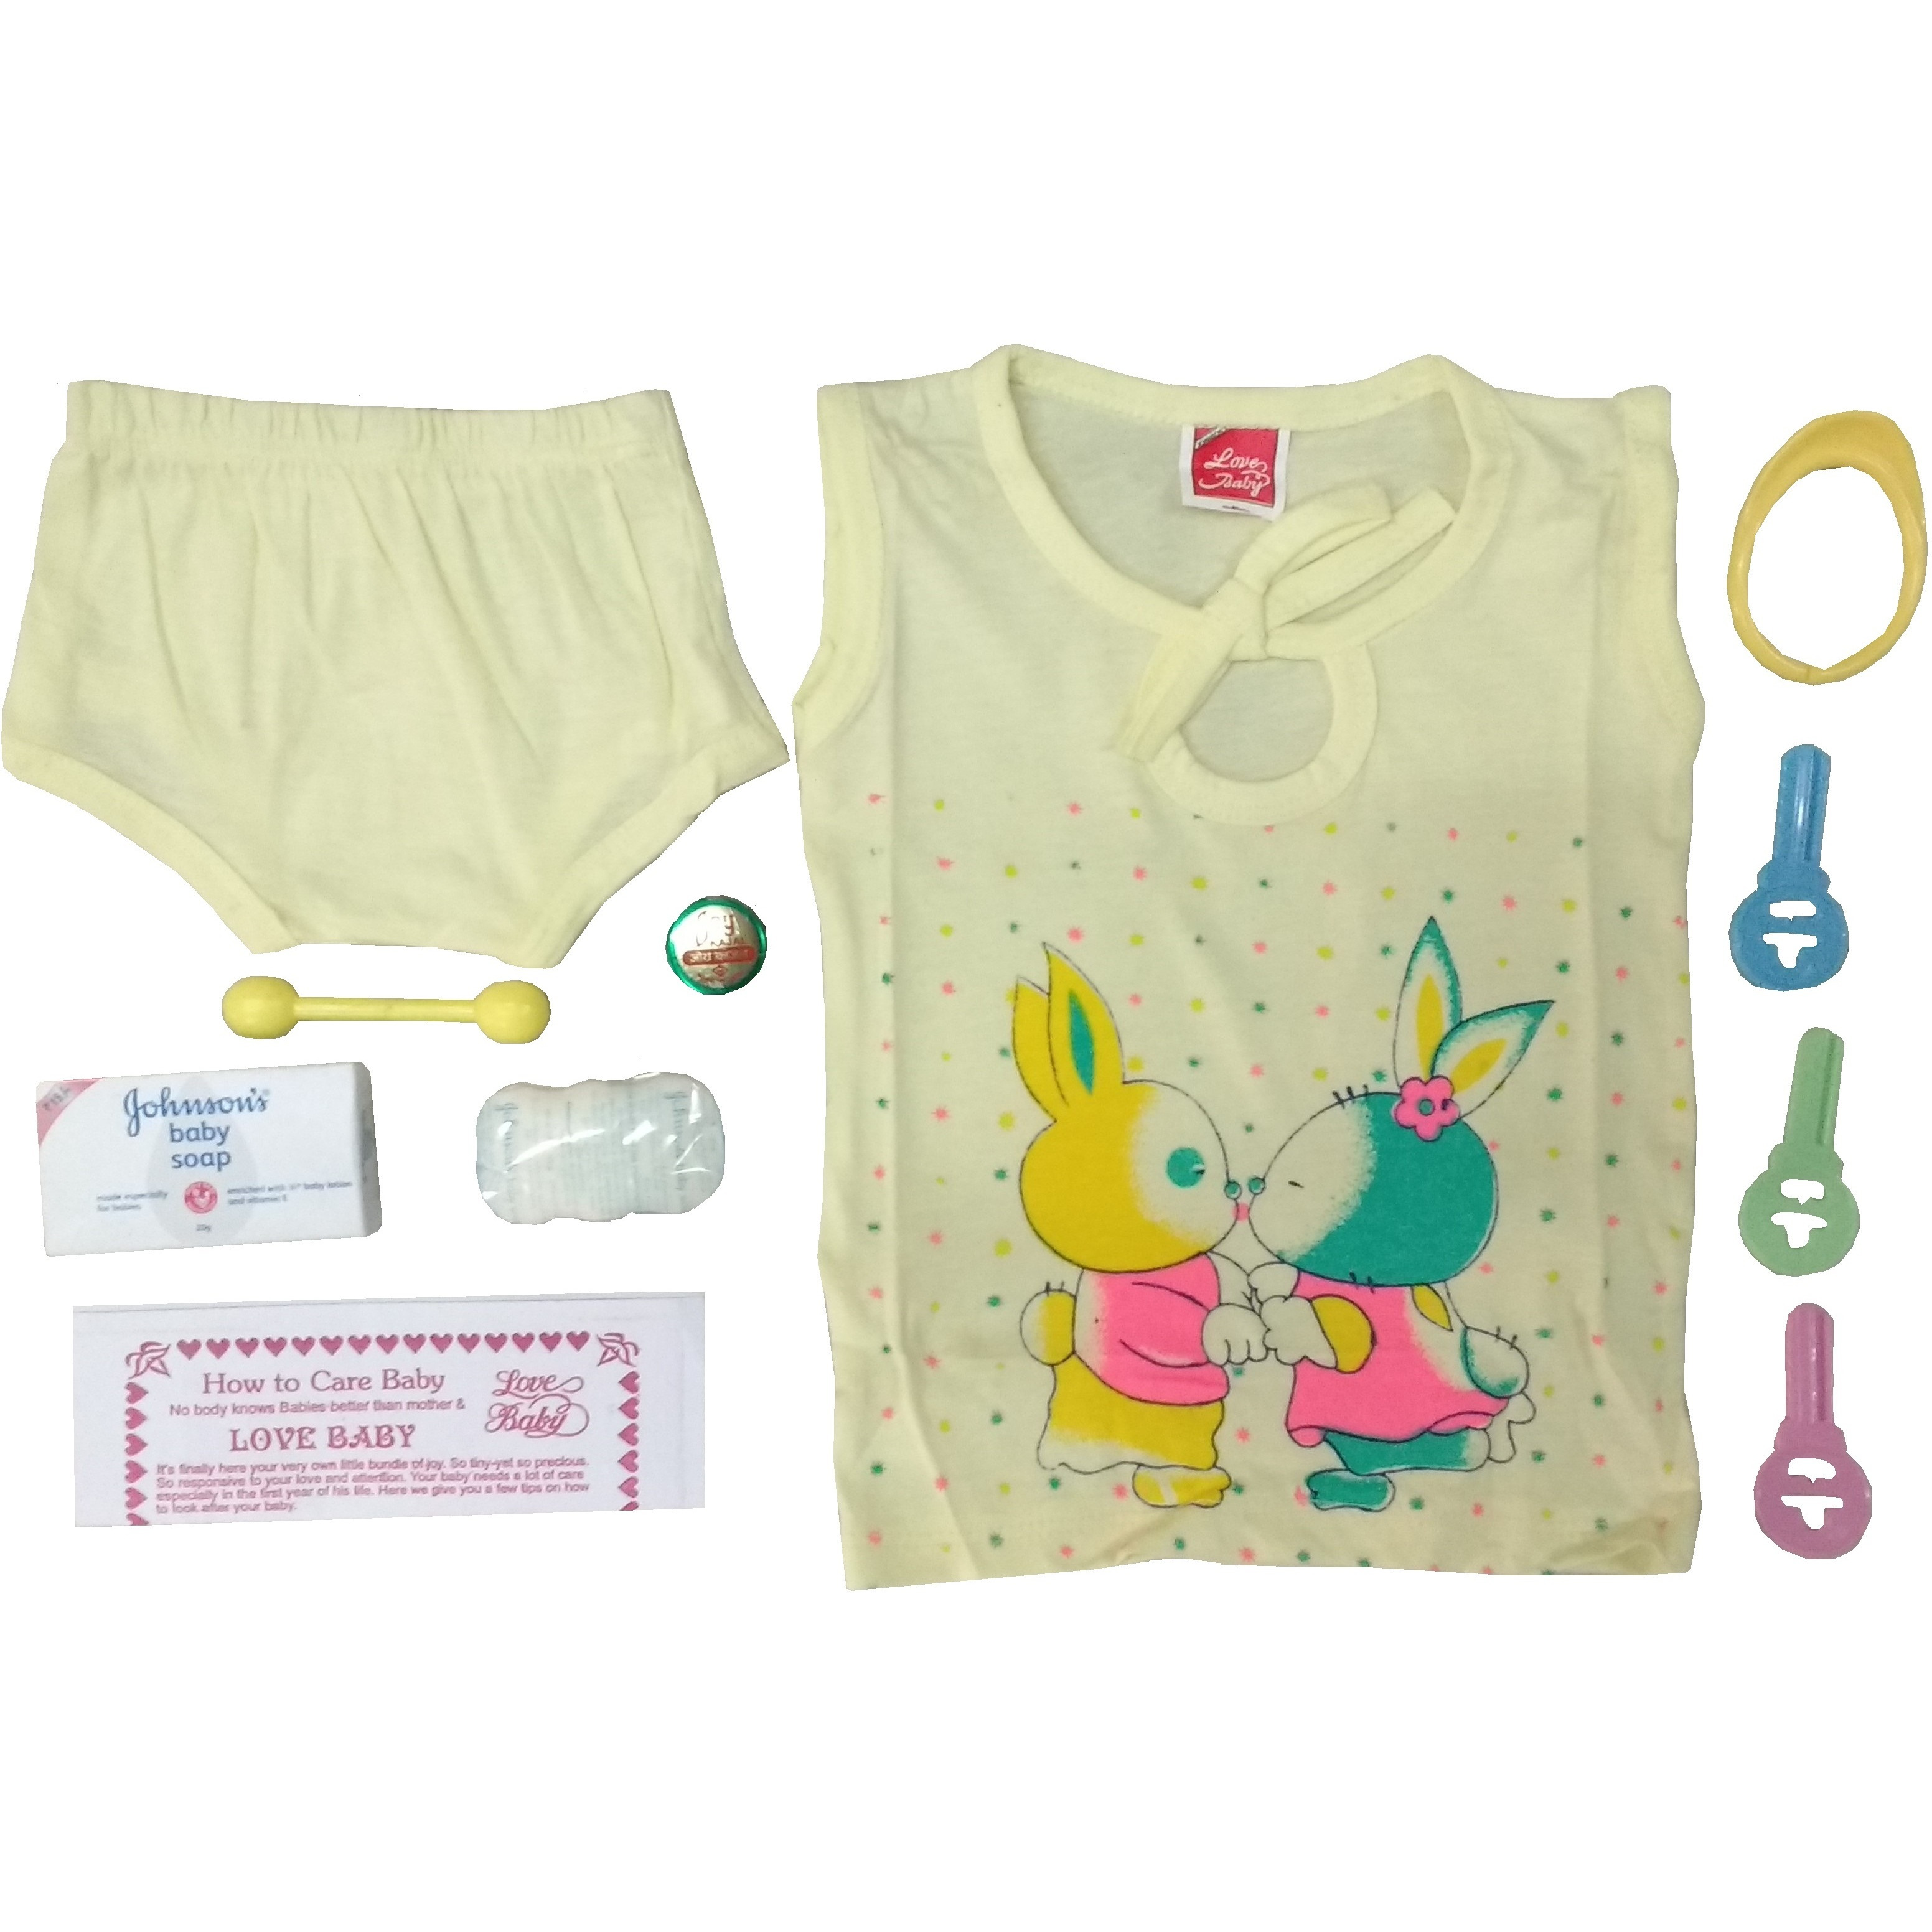 Love Baby Gift Set - Tom & Jerry Yellow